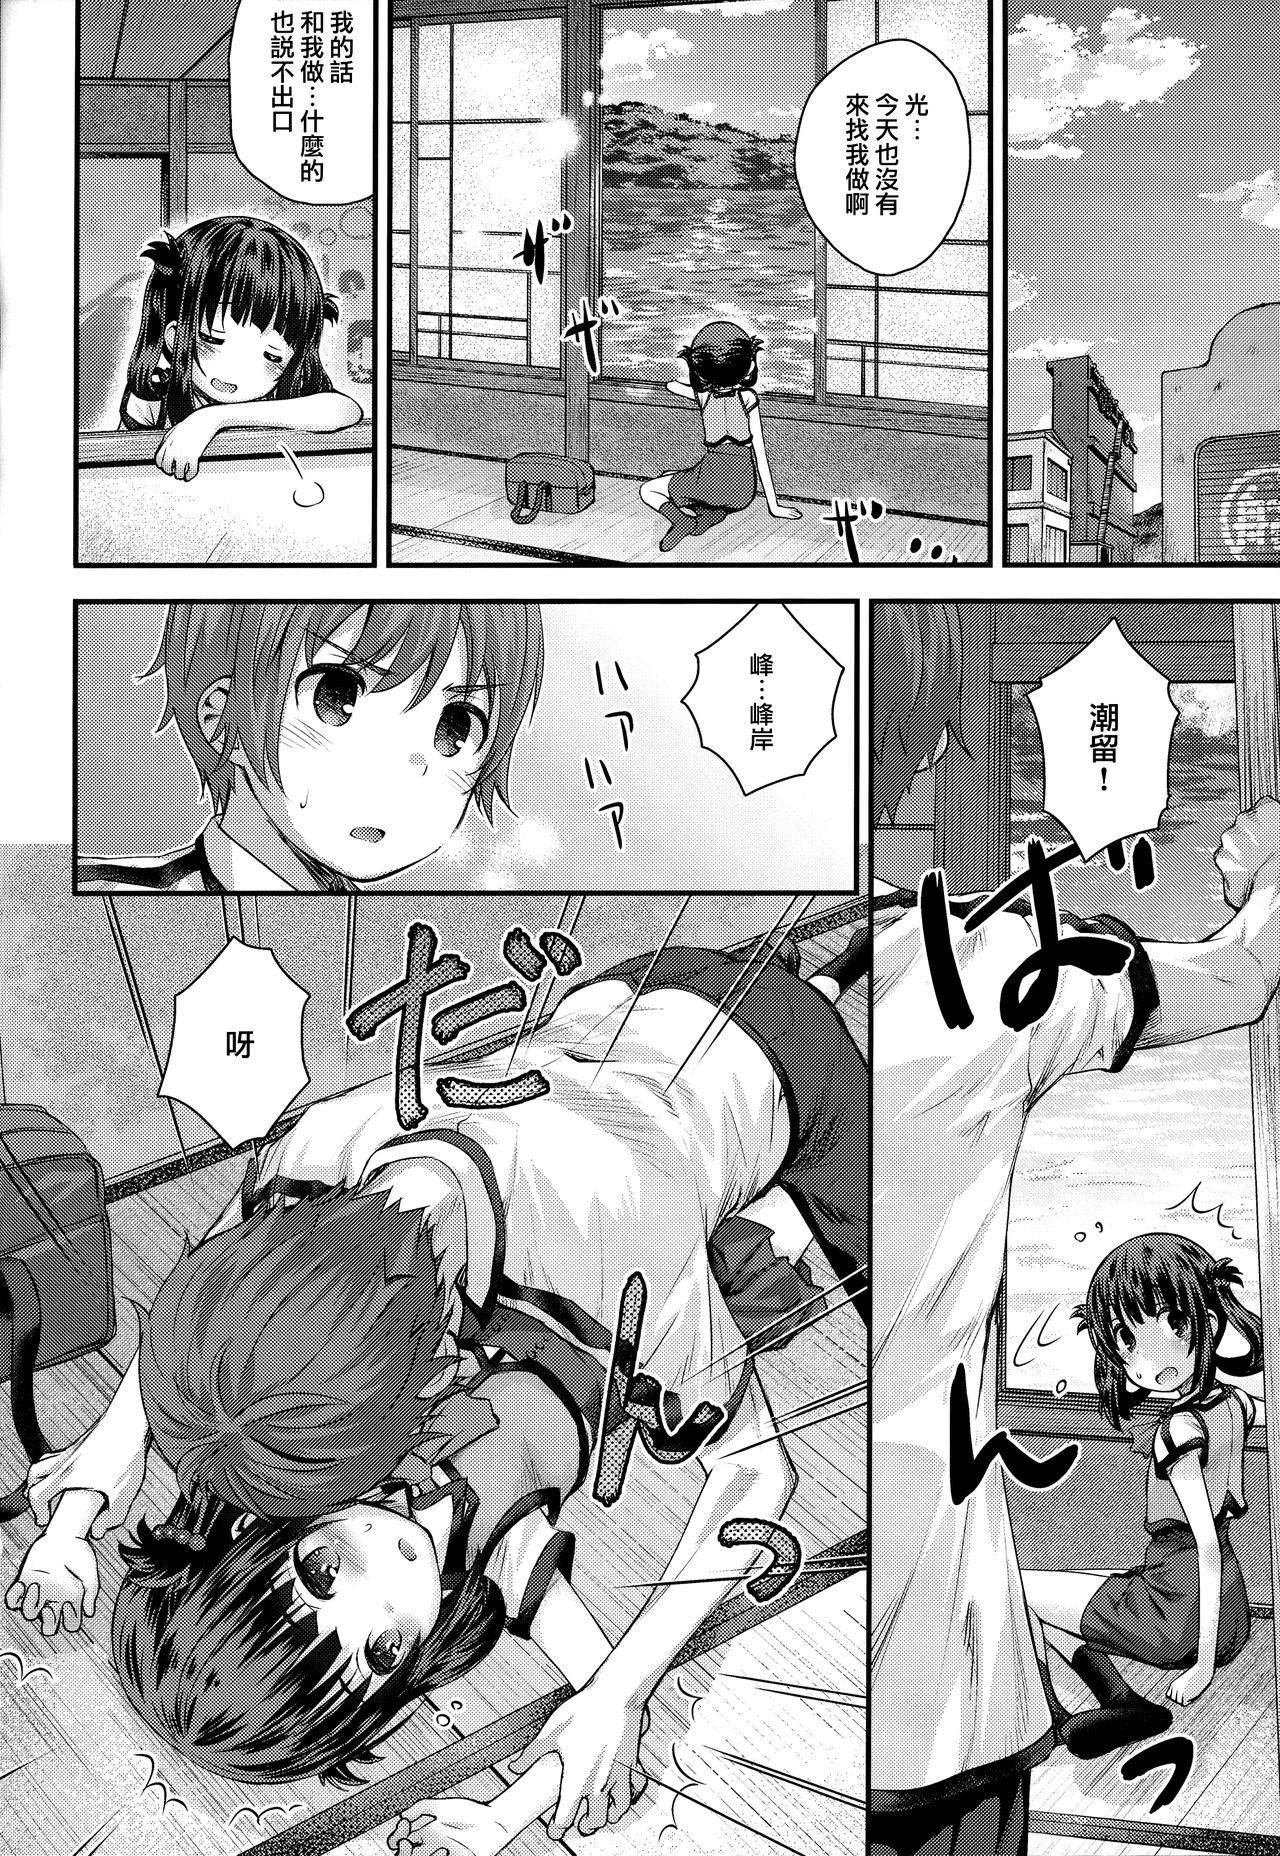 Stranger Soredemo Miuna - Nagi no asukara Missionary Position Porn - Page 12